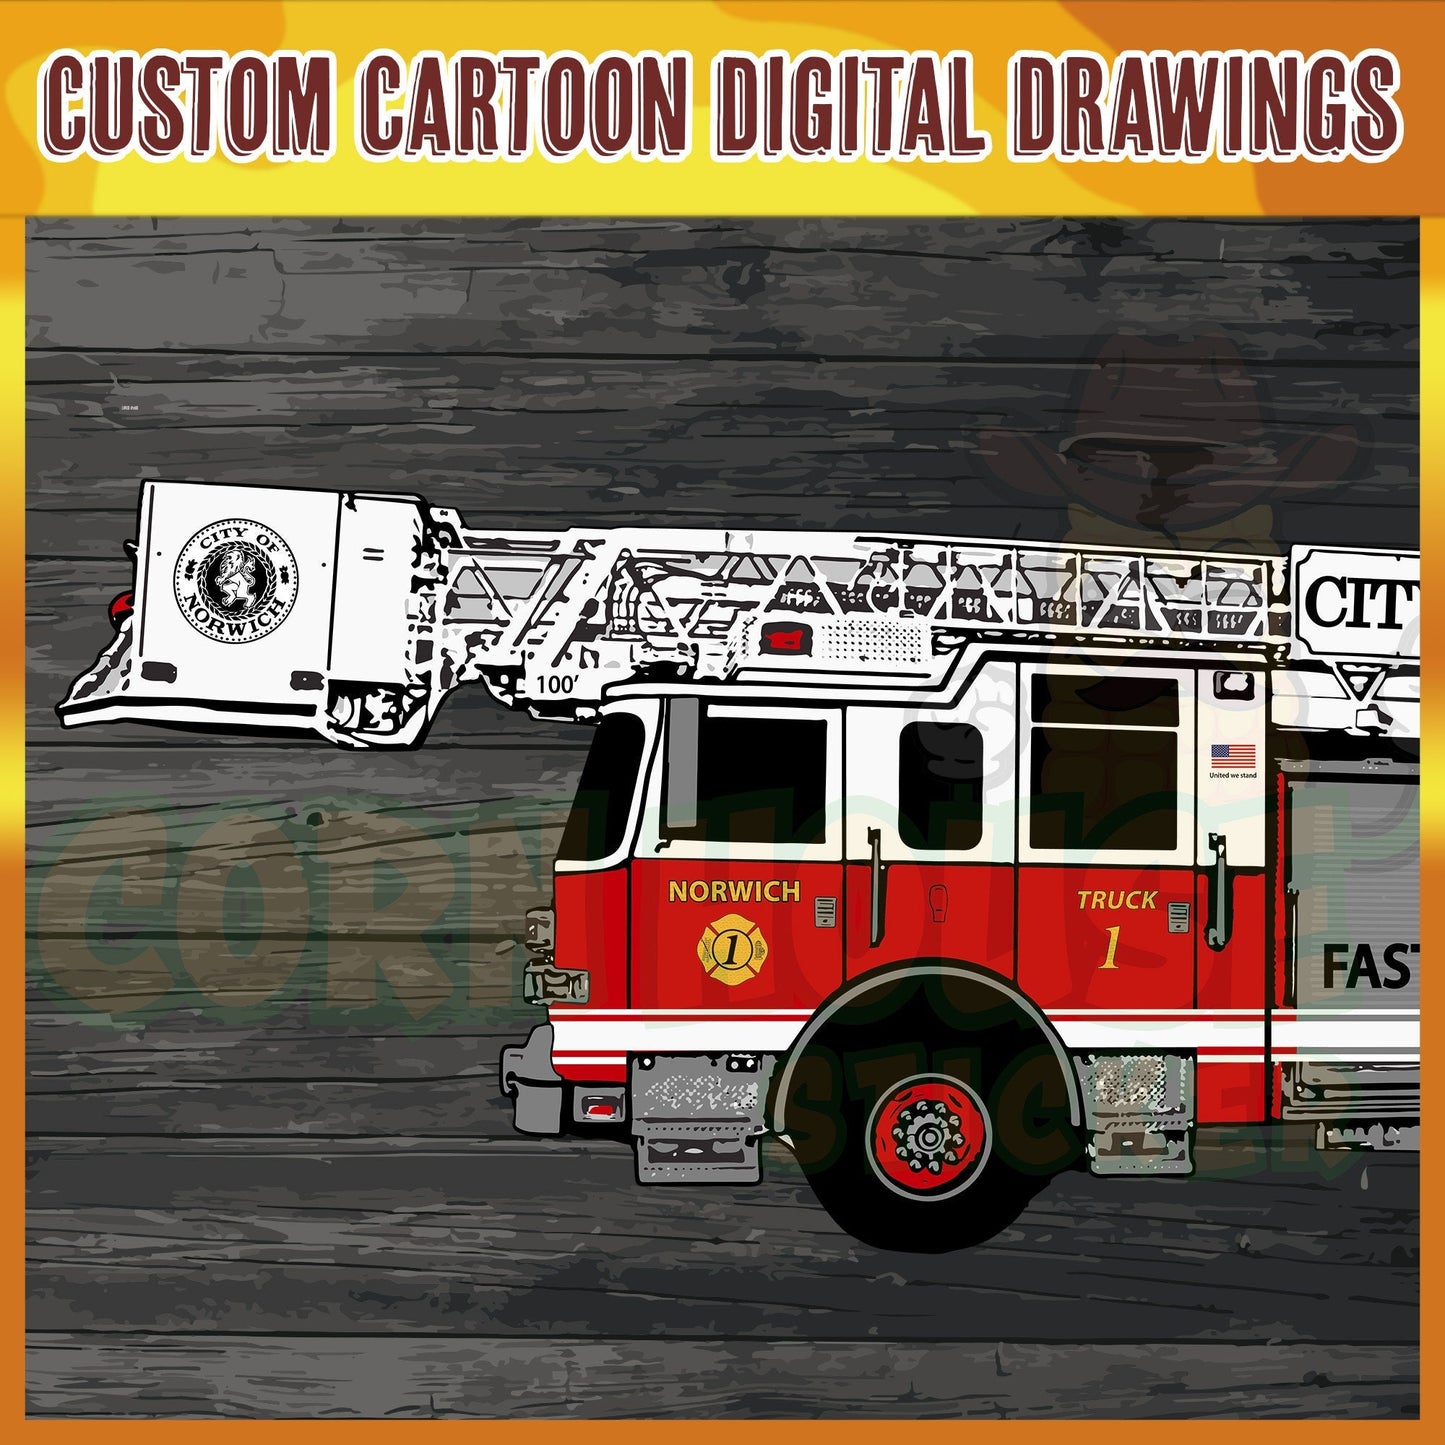 Cartoon Fire apparatus or Emergency response vehicles.